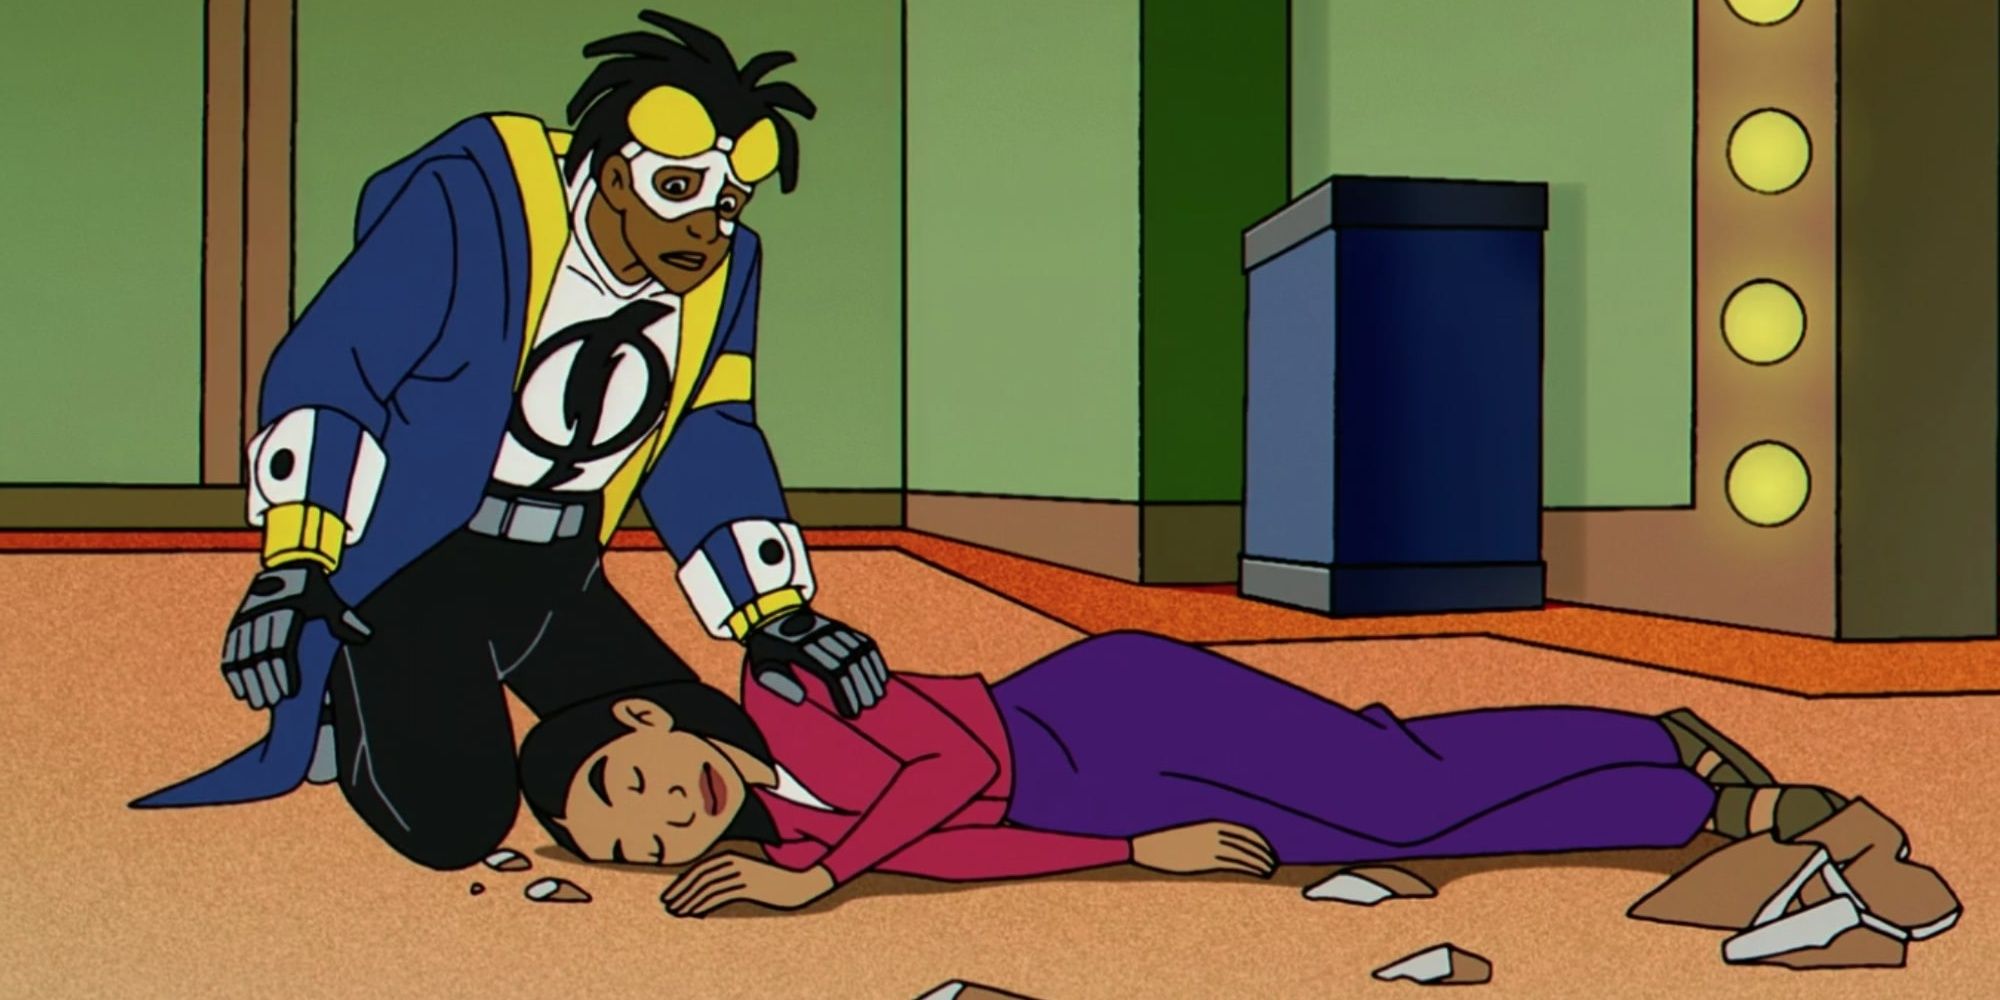 Virgil from Static Shock kneeling beside Daisy who is lying on the floor injured